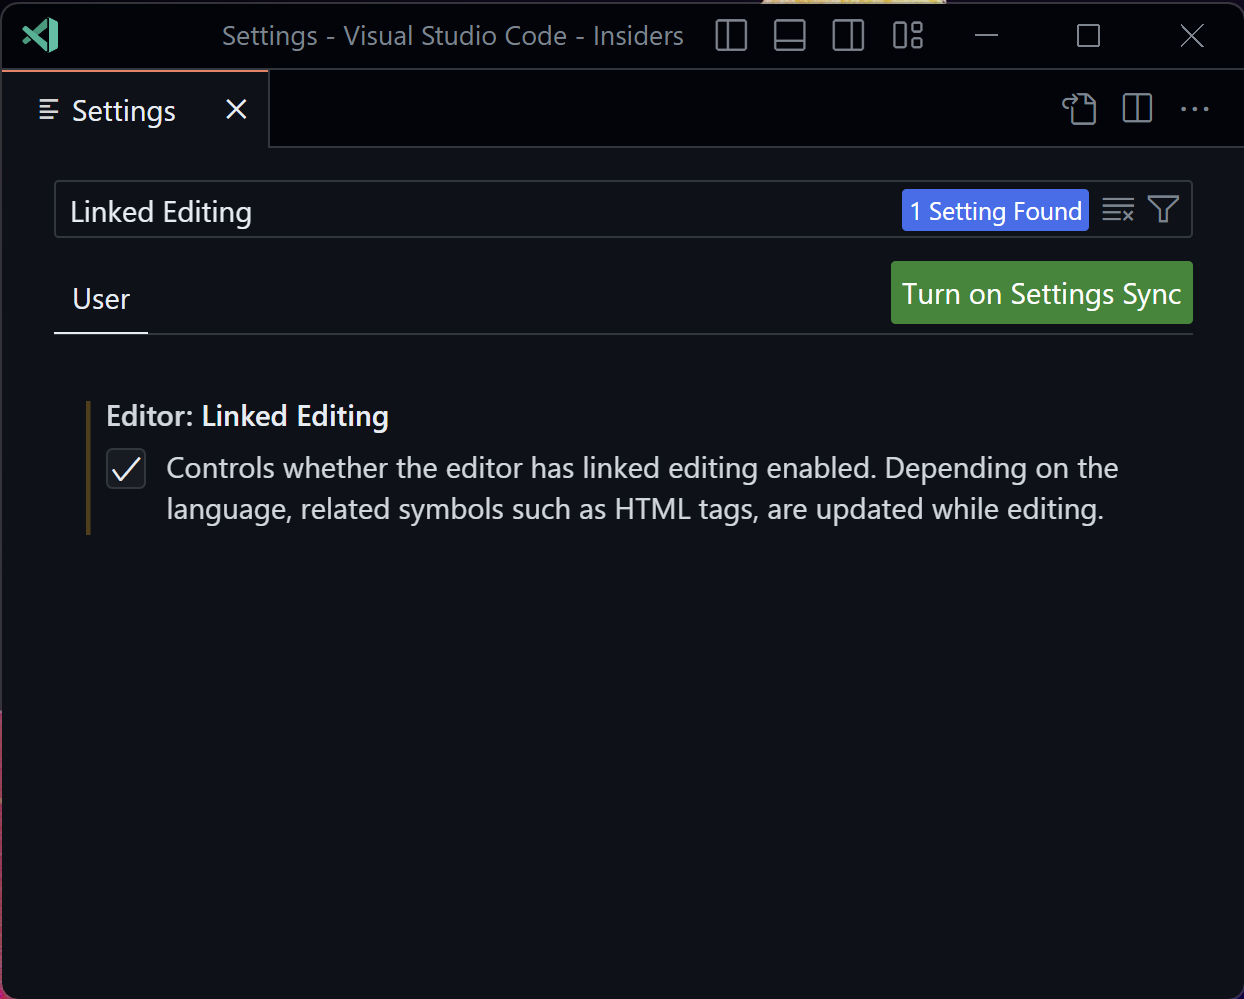 Visual Studio Code's Editor: Linked Editing` option